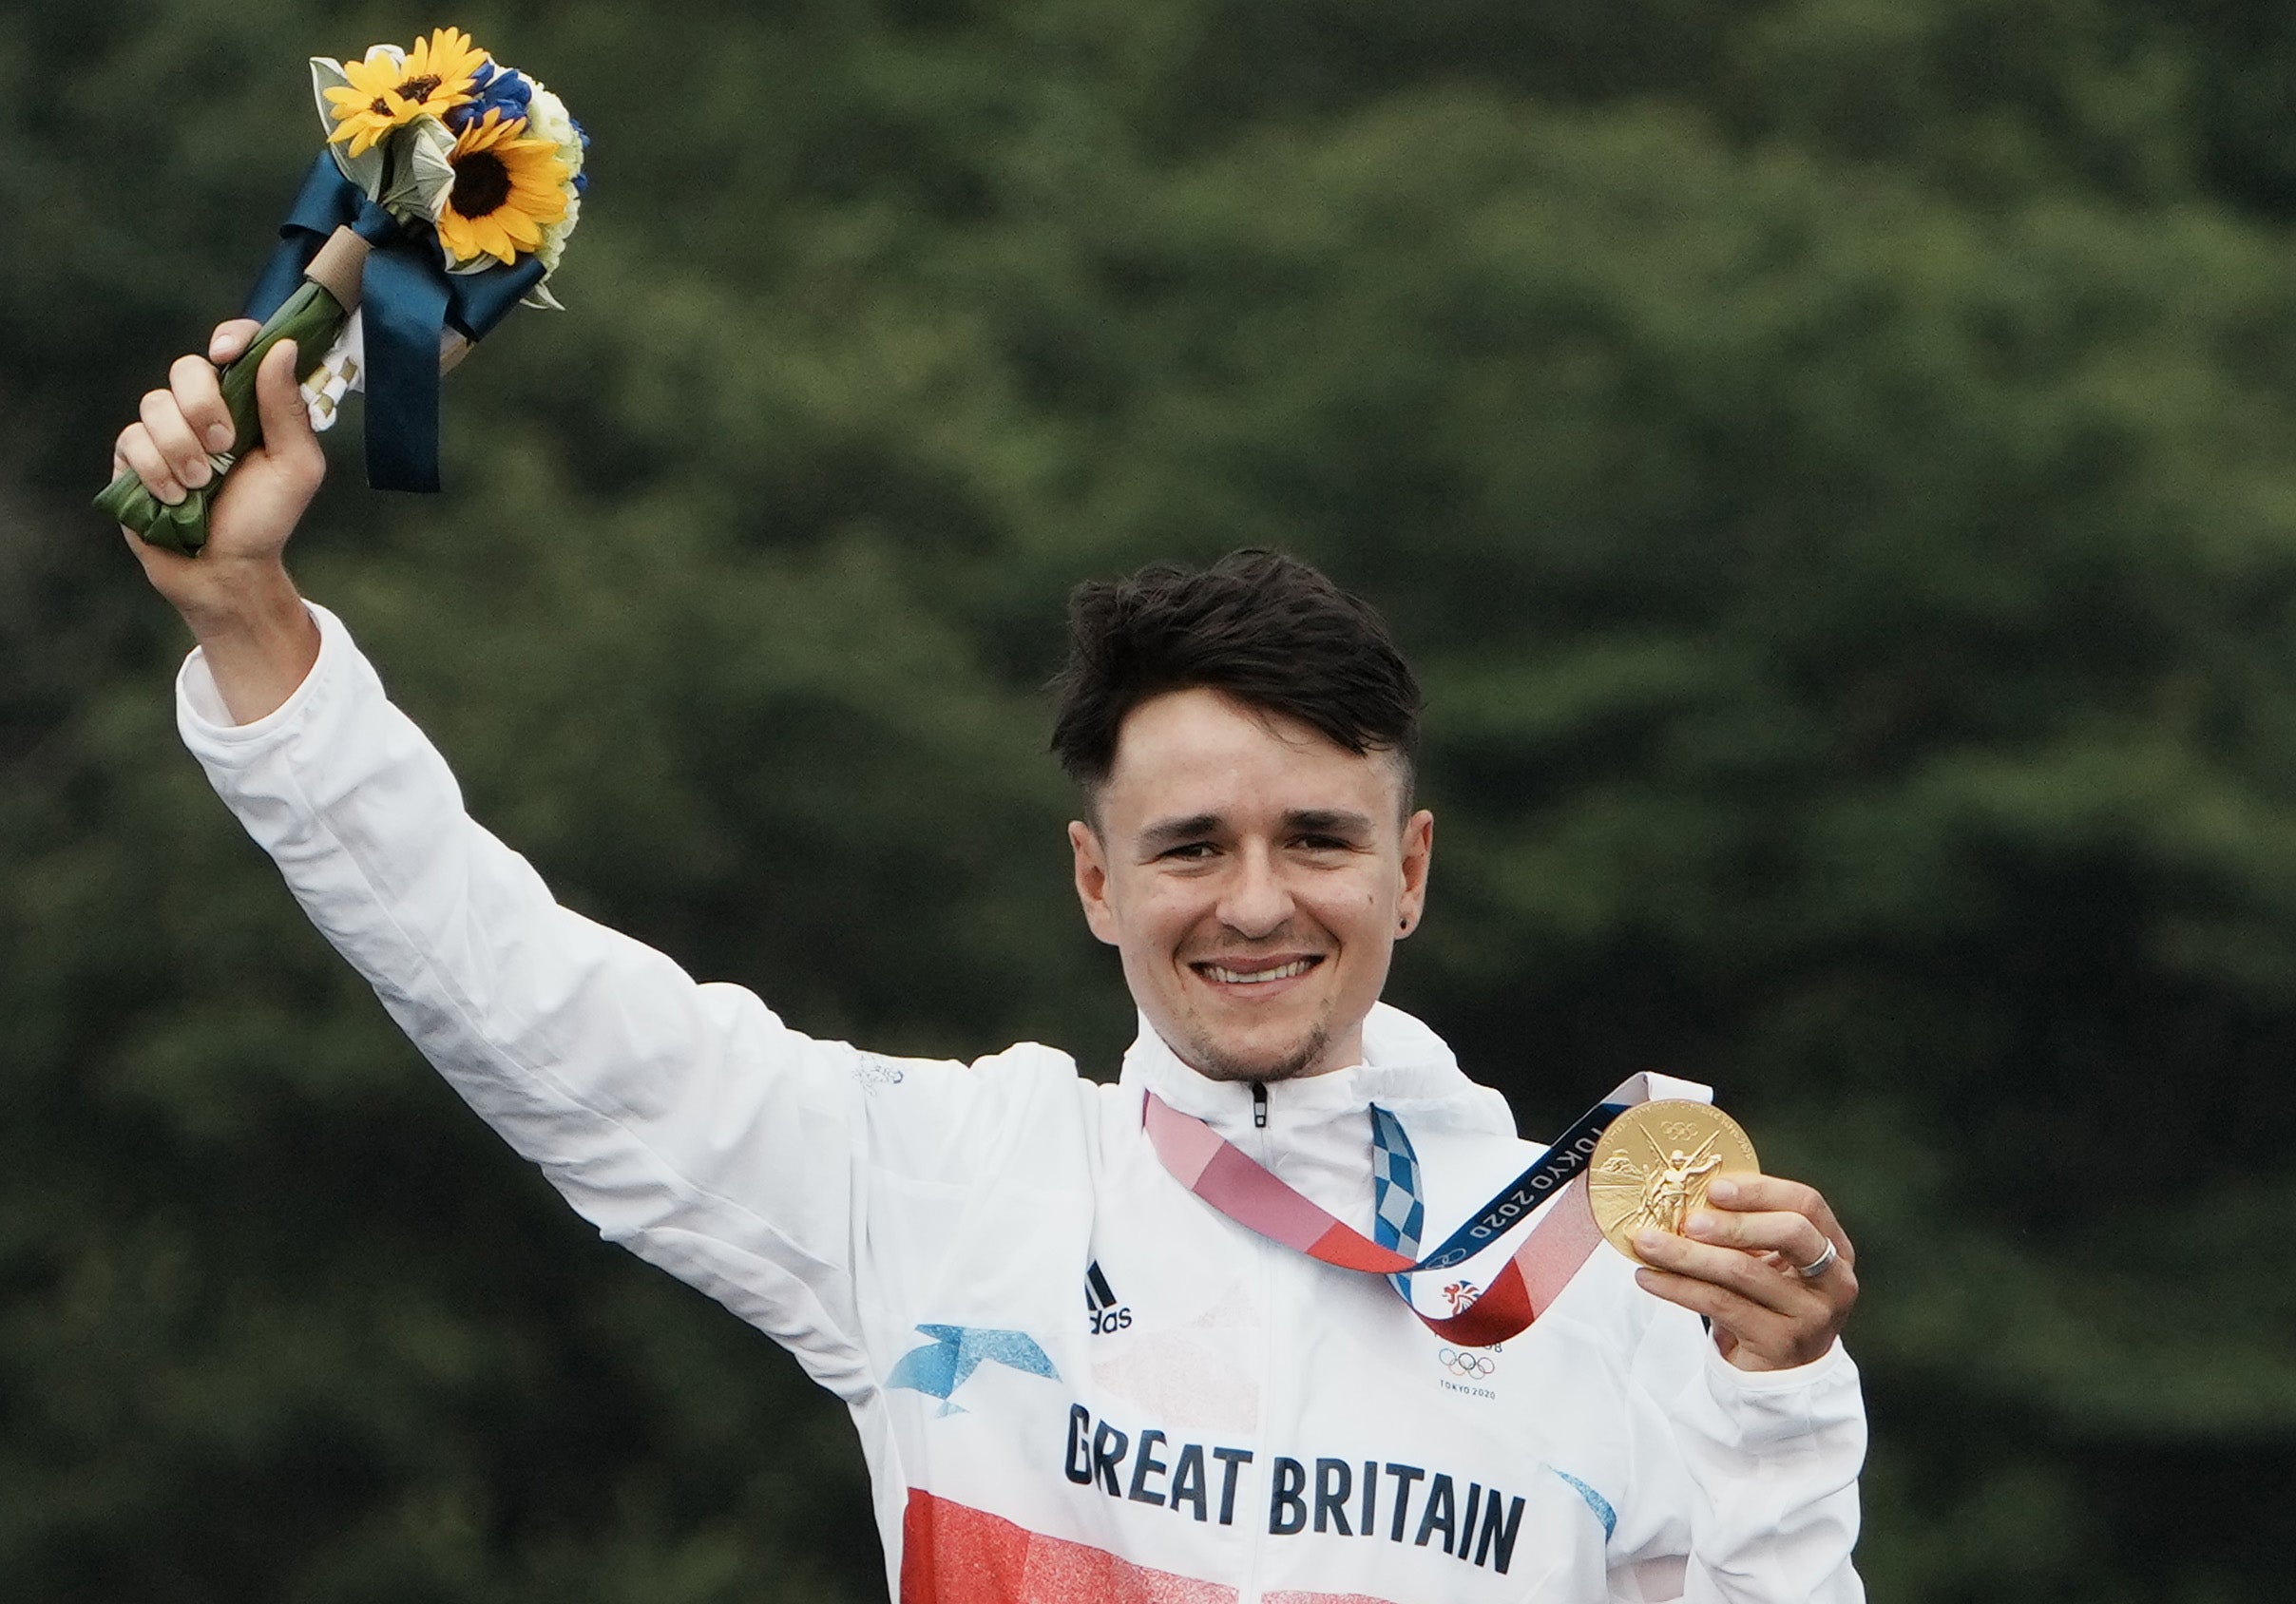 Tom Pidcock raises his gold medal aloft